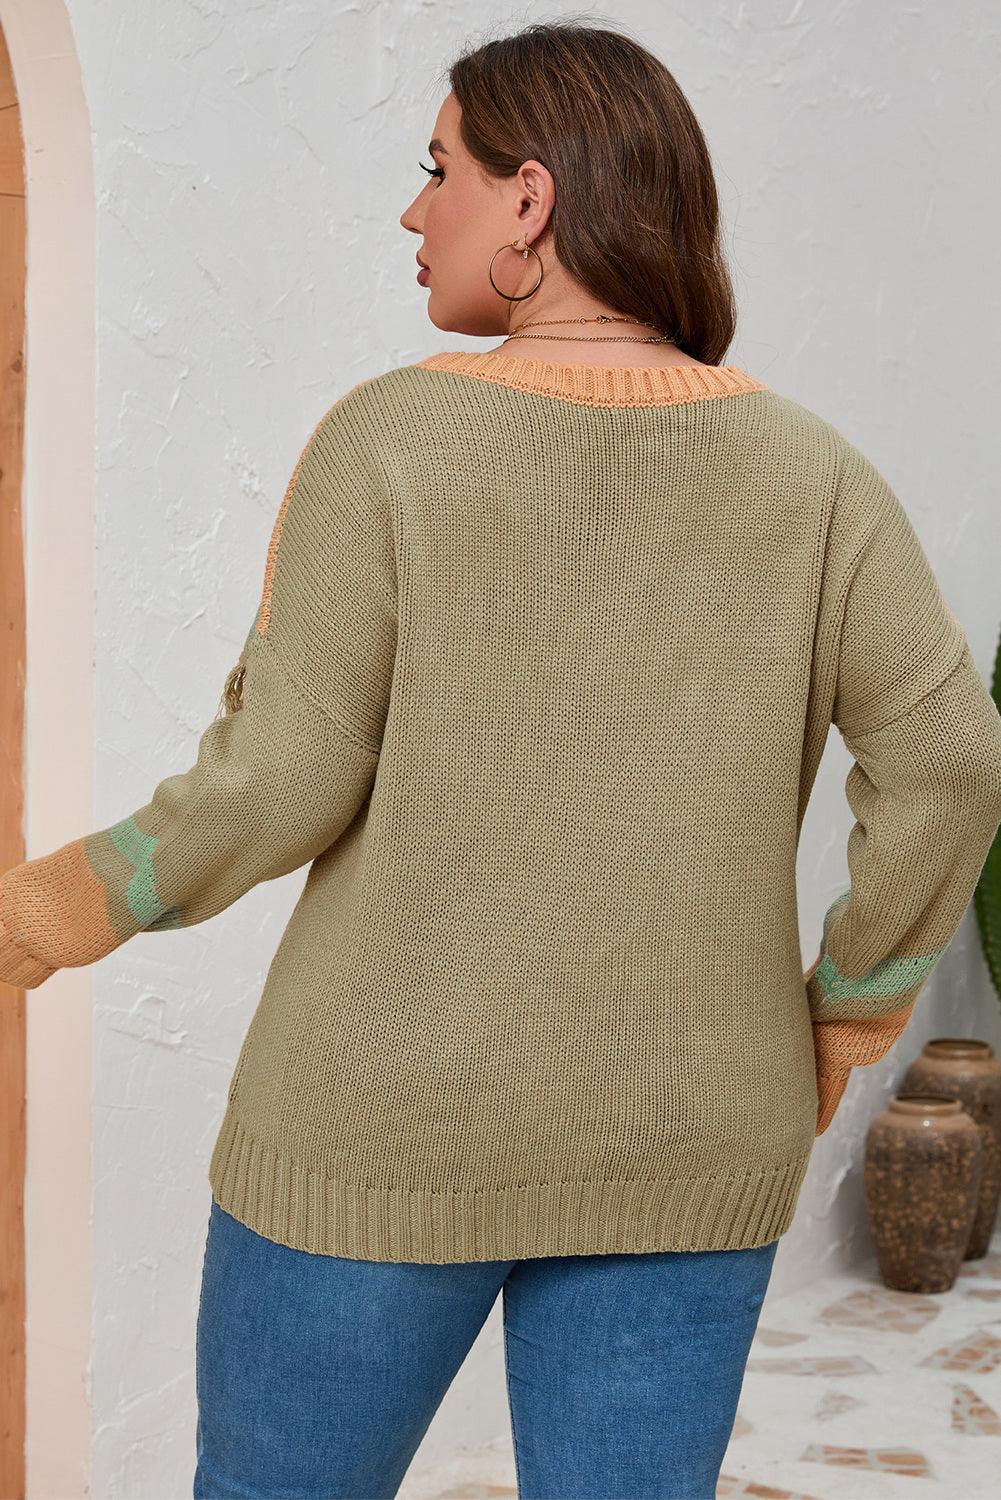 Contrast Long Sleeve Plus Size Fringe Sweater - MXSTUDIO.COM